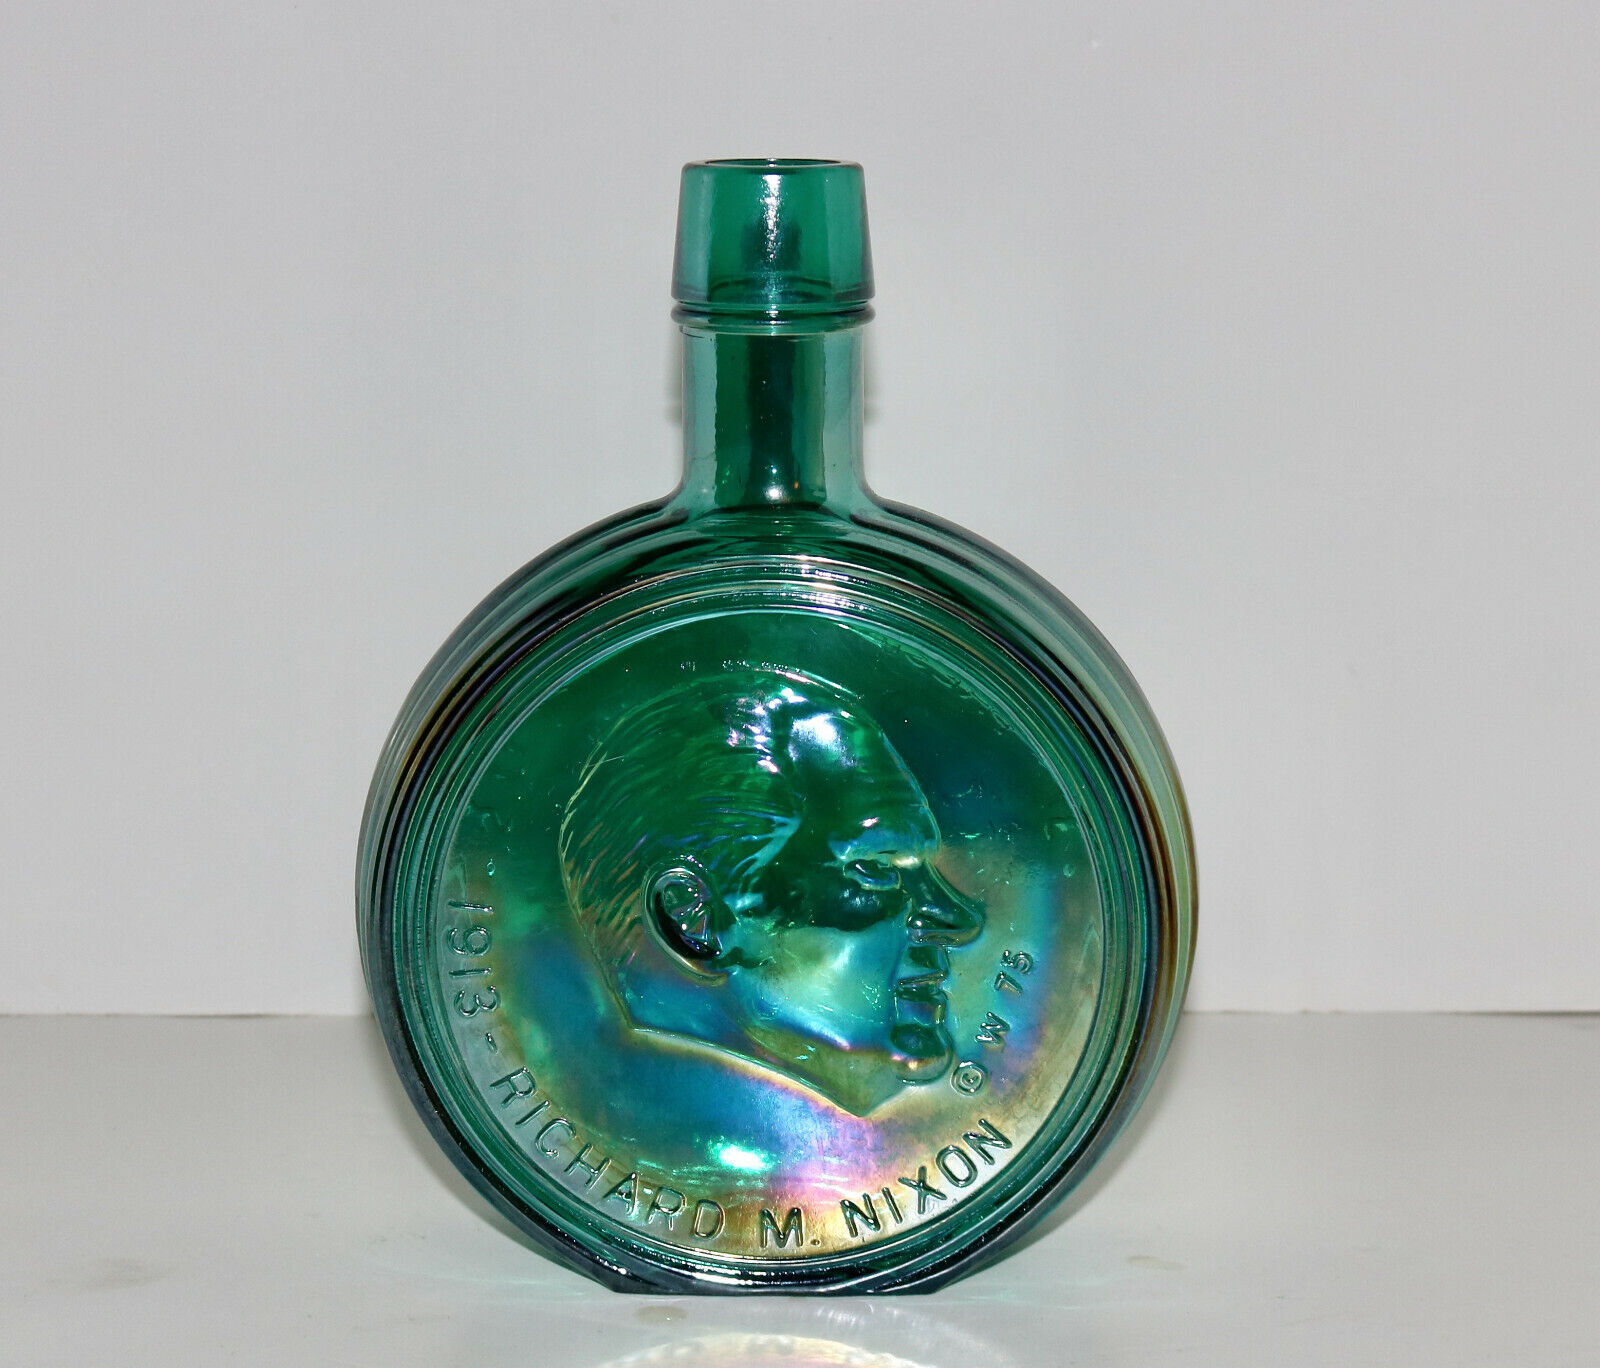 Wheatonware Richard Milhous Nixon commemorative decanter  vintage